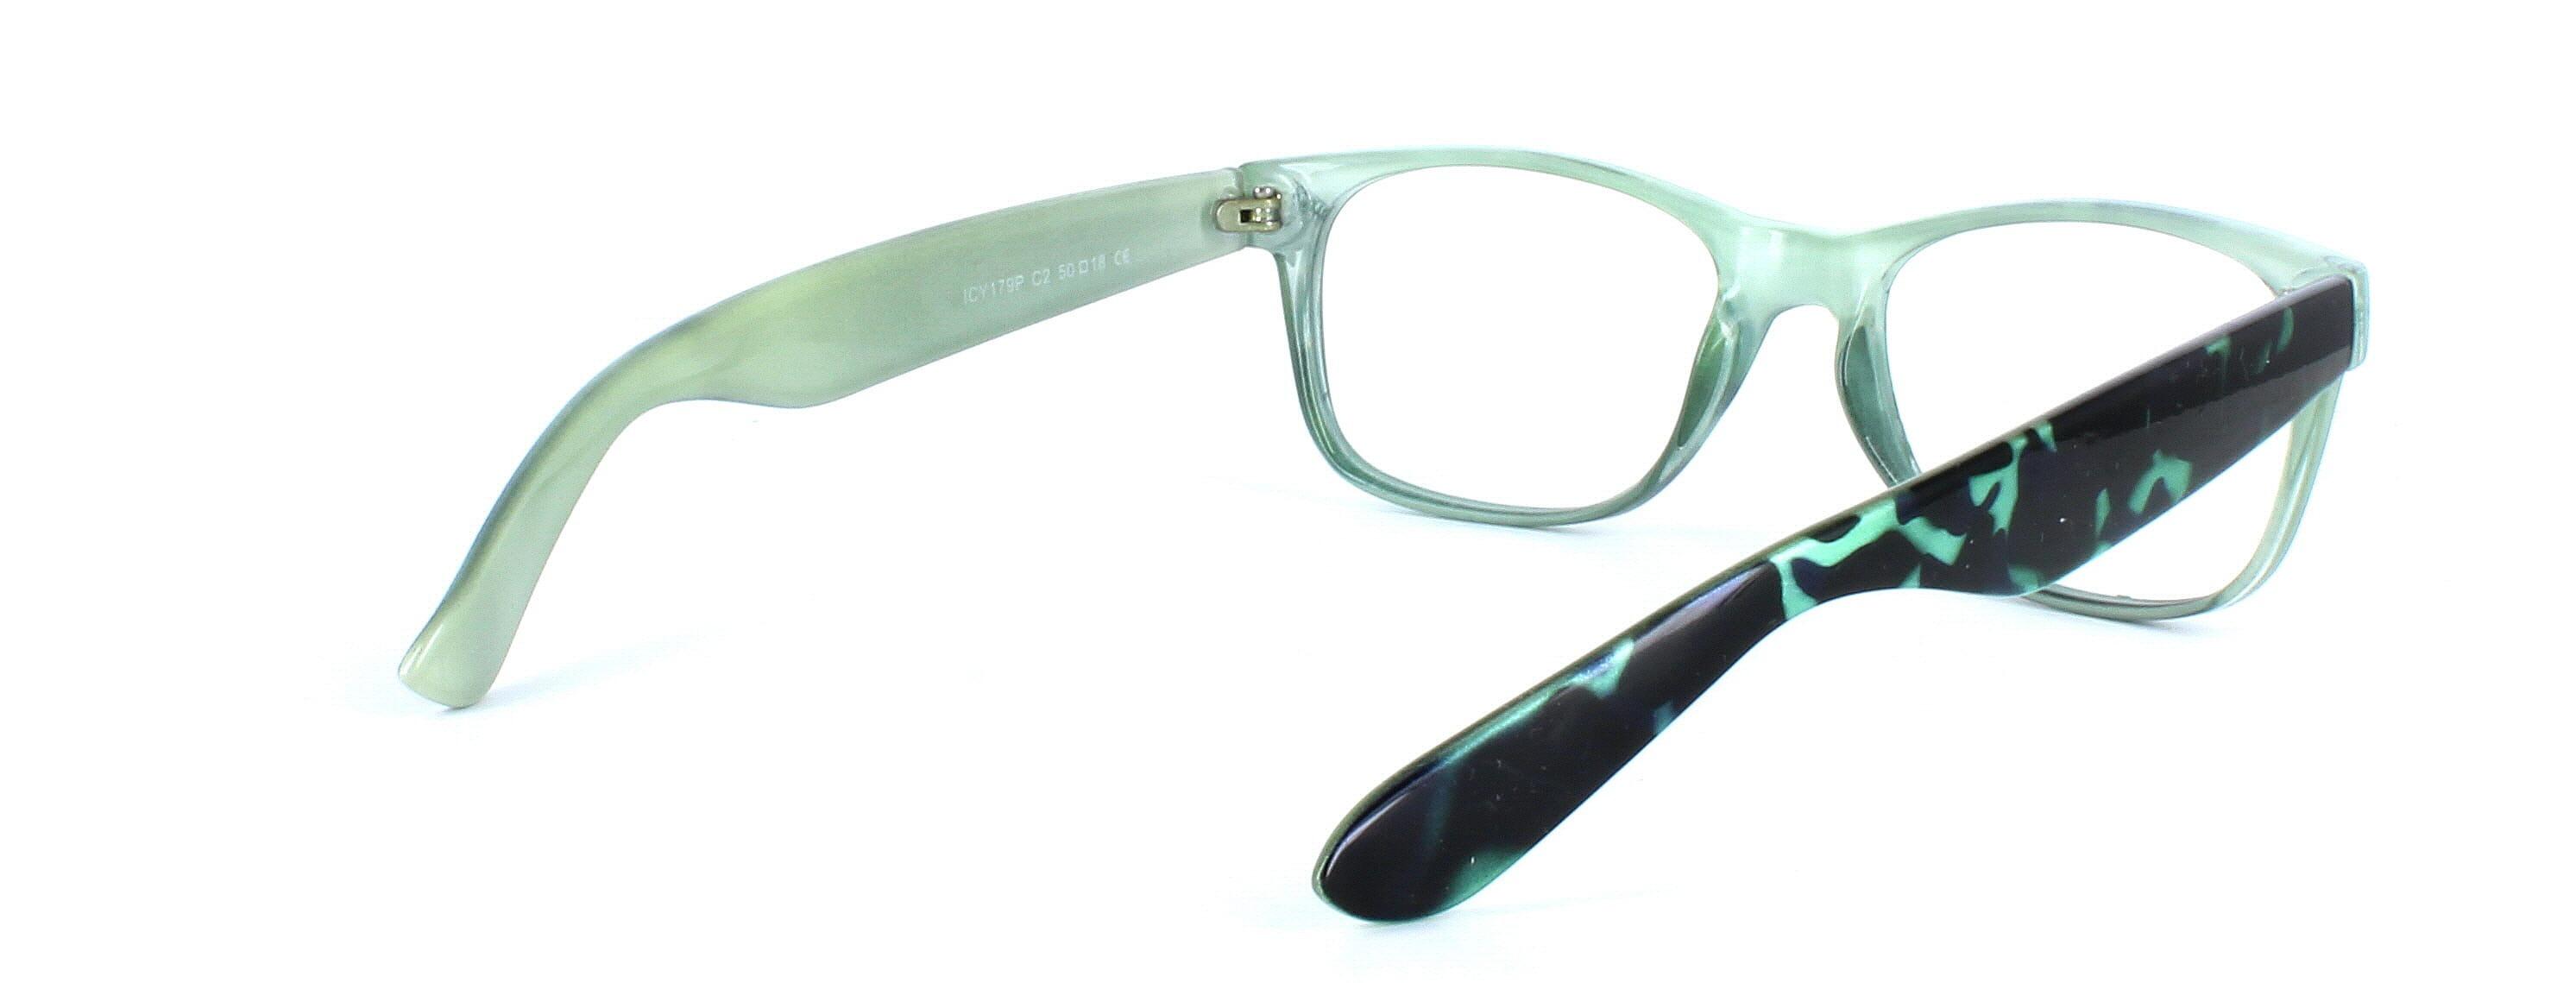 Lester - Green - Unisex acetate glasses frame - image view 5